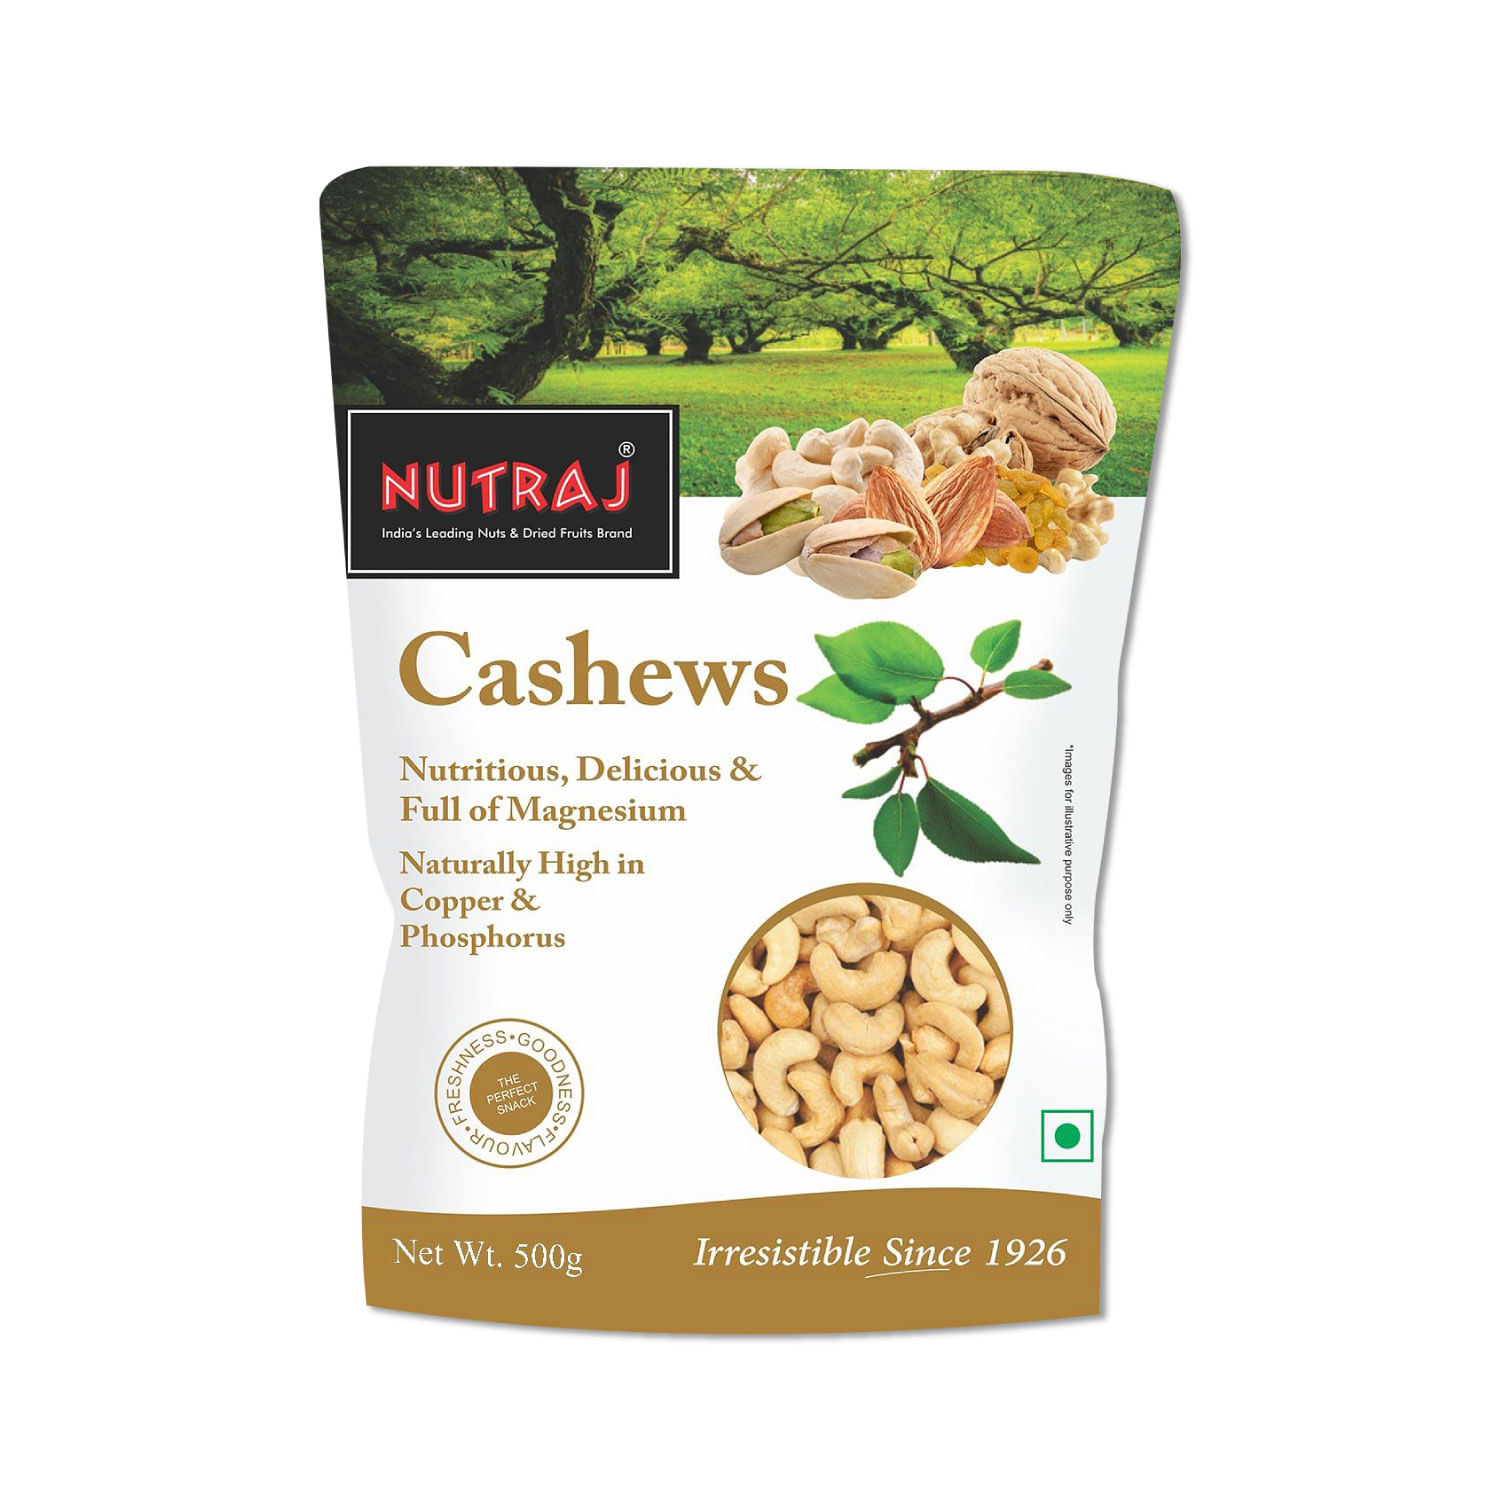 Nutraj Fard Premium Dates (500g) and Nutraj Cashew Nuts W320 (500g)